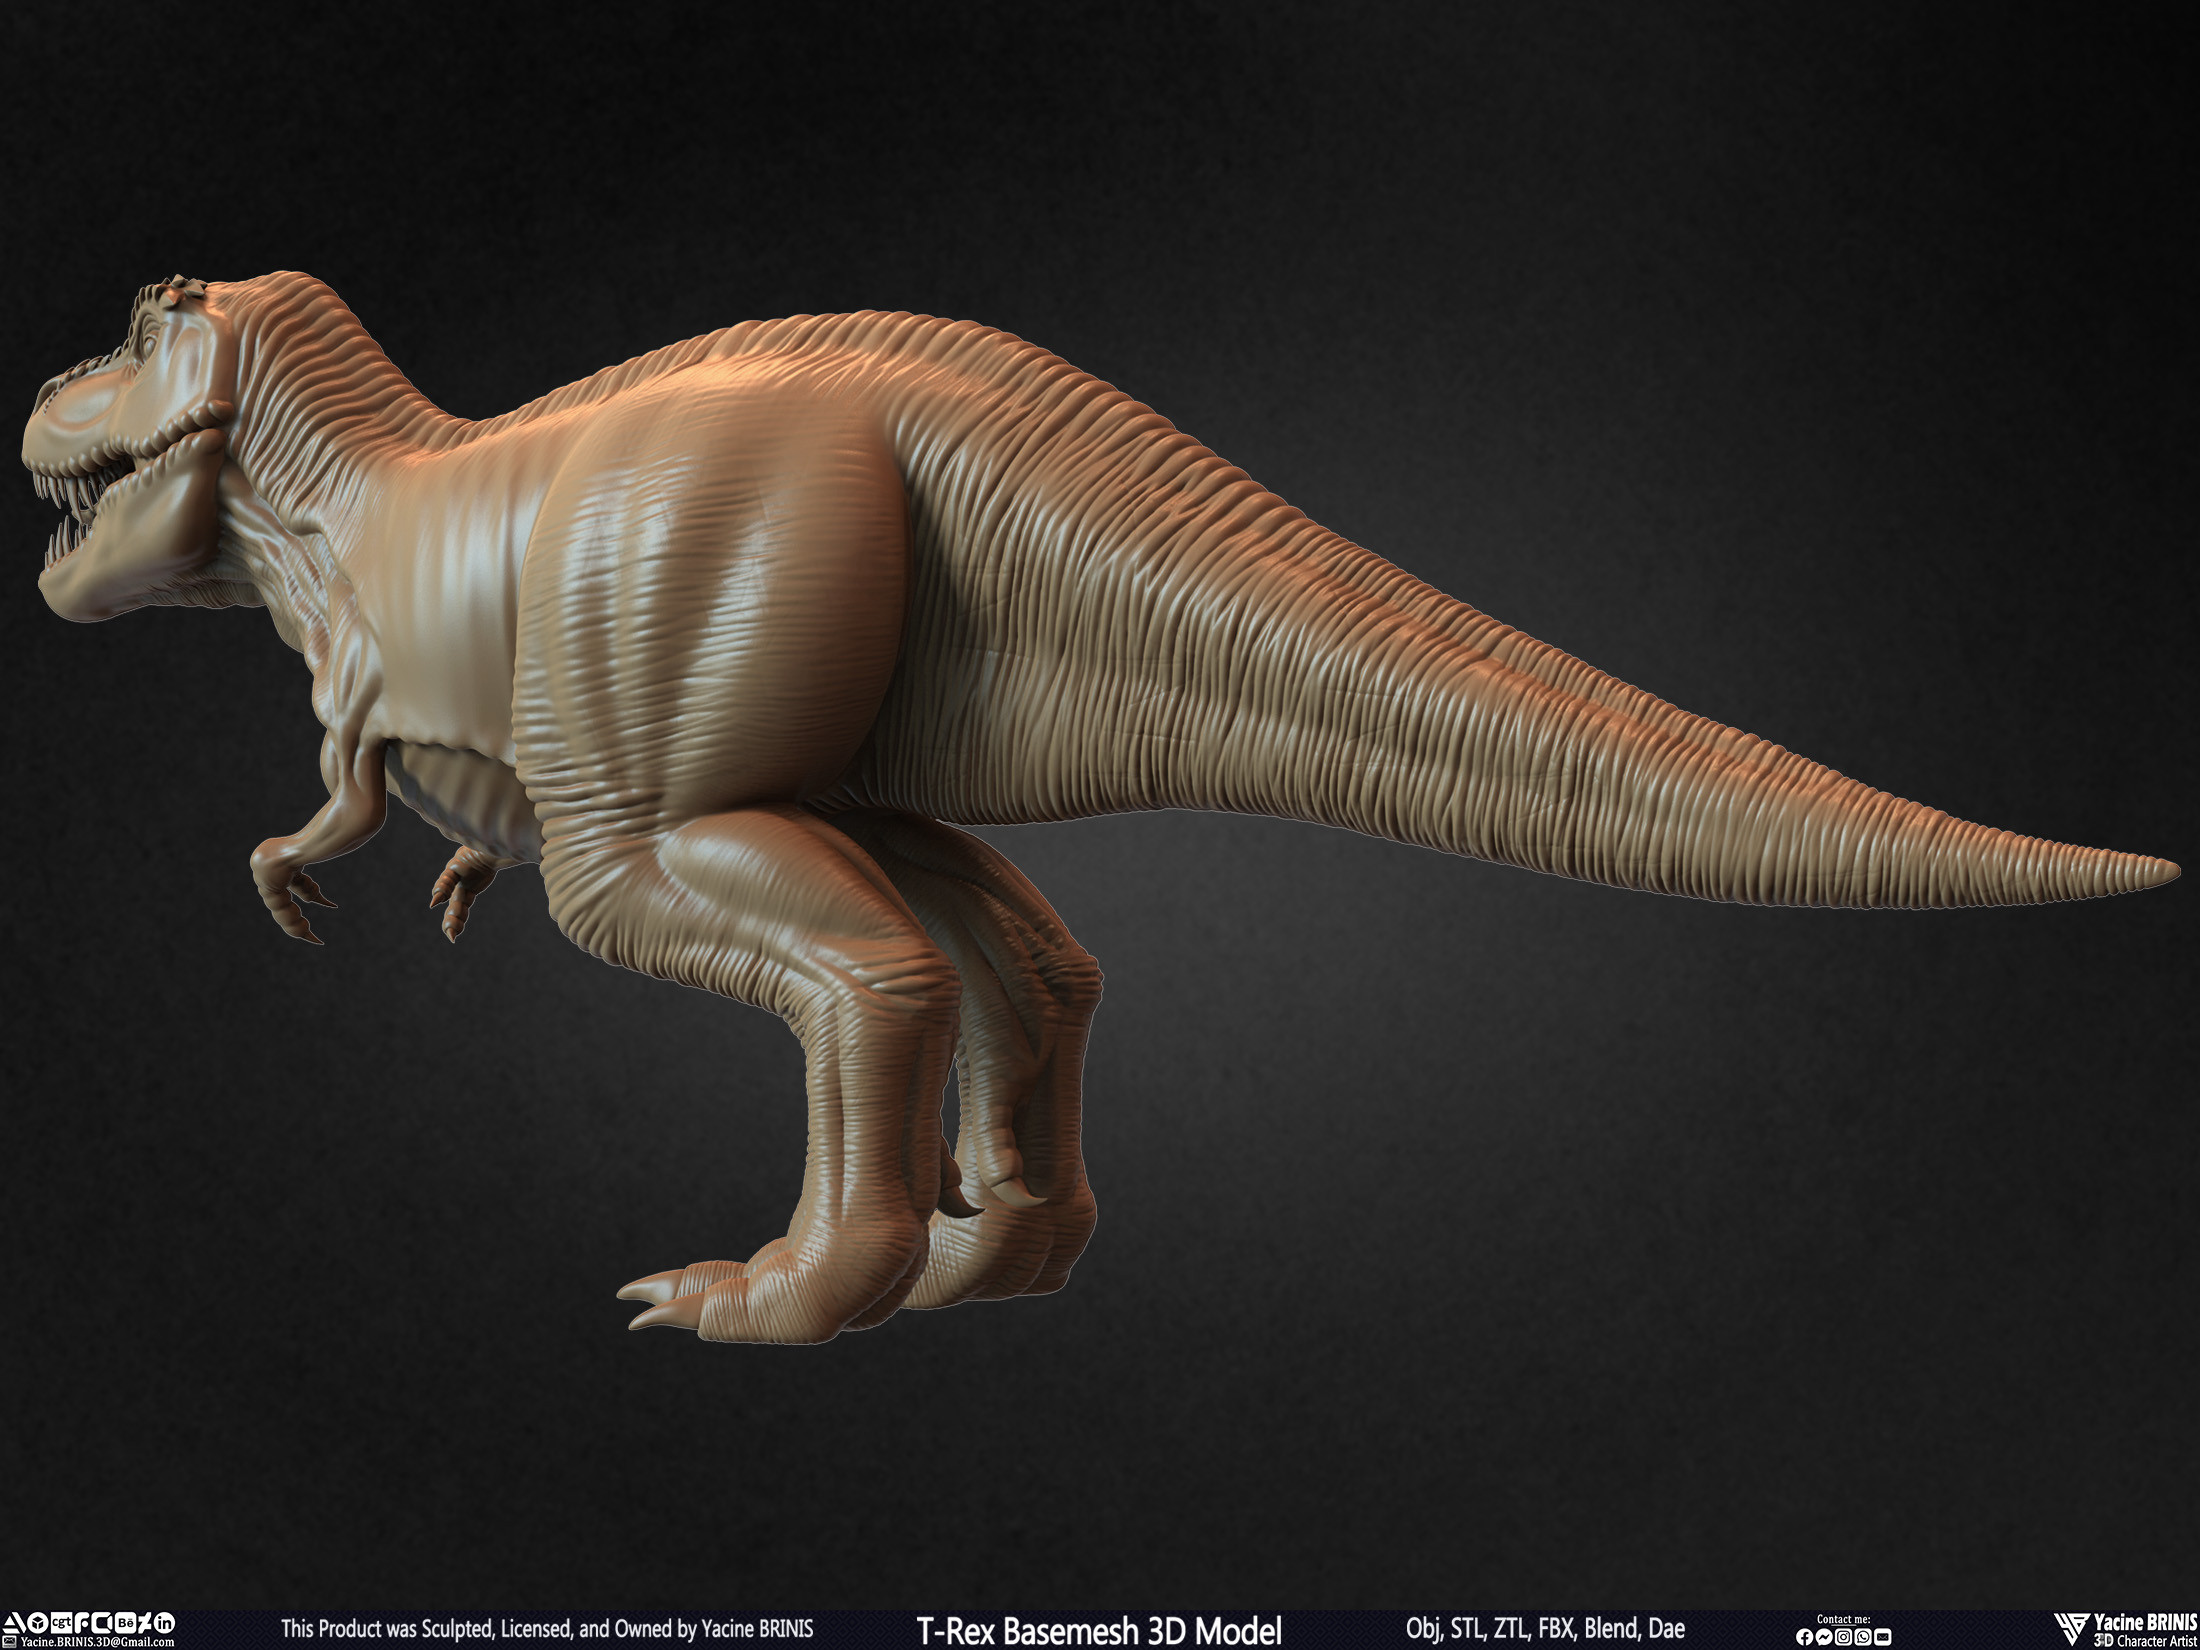 T-Rex Basemesh 3D Model (Tyrannosaurus Rex) Sculpted By Yacine BRINIS Set 008